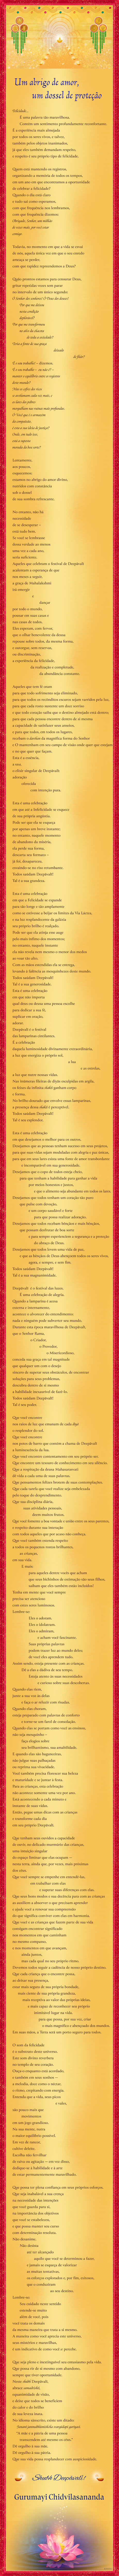 Portuguese Poem